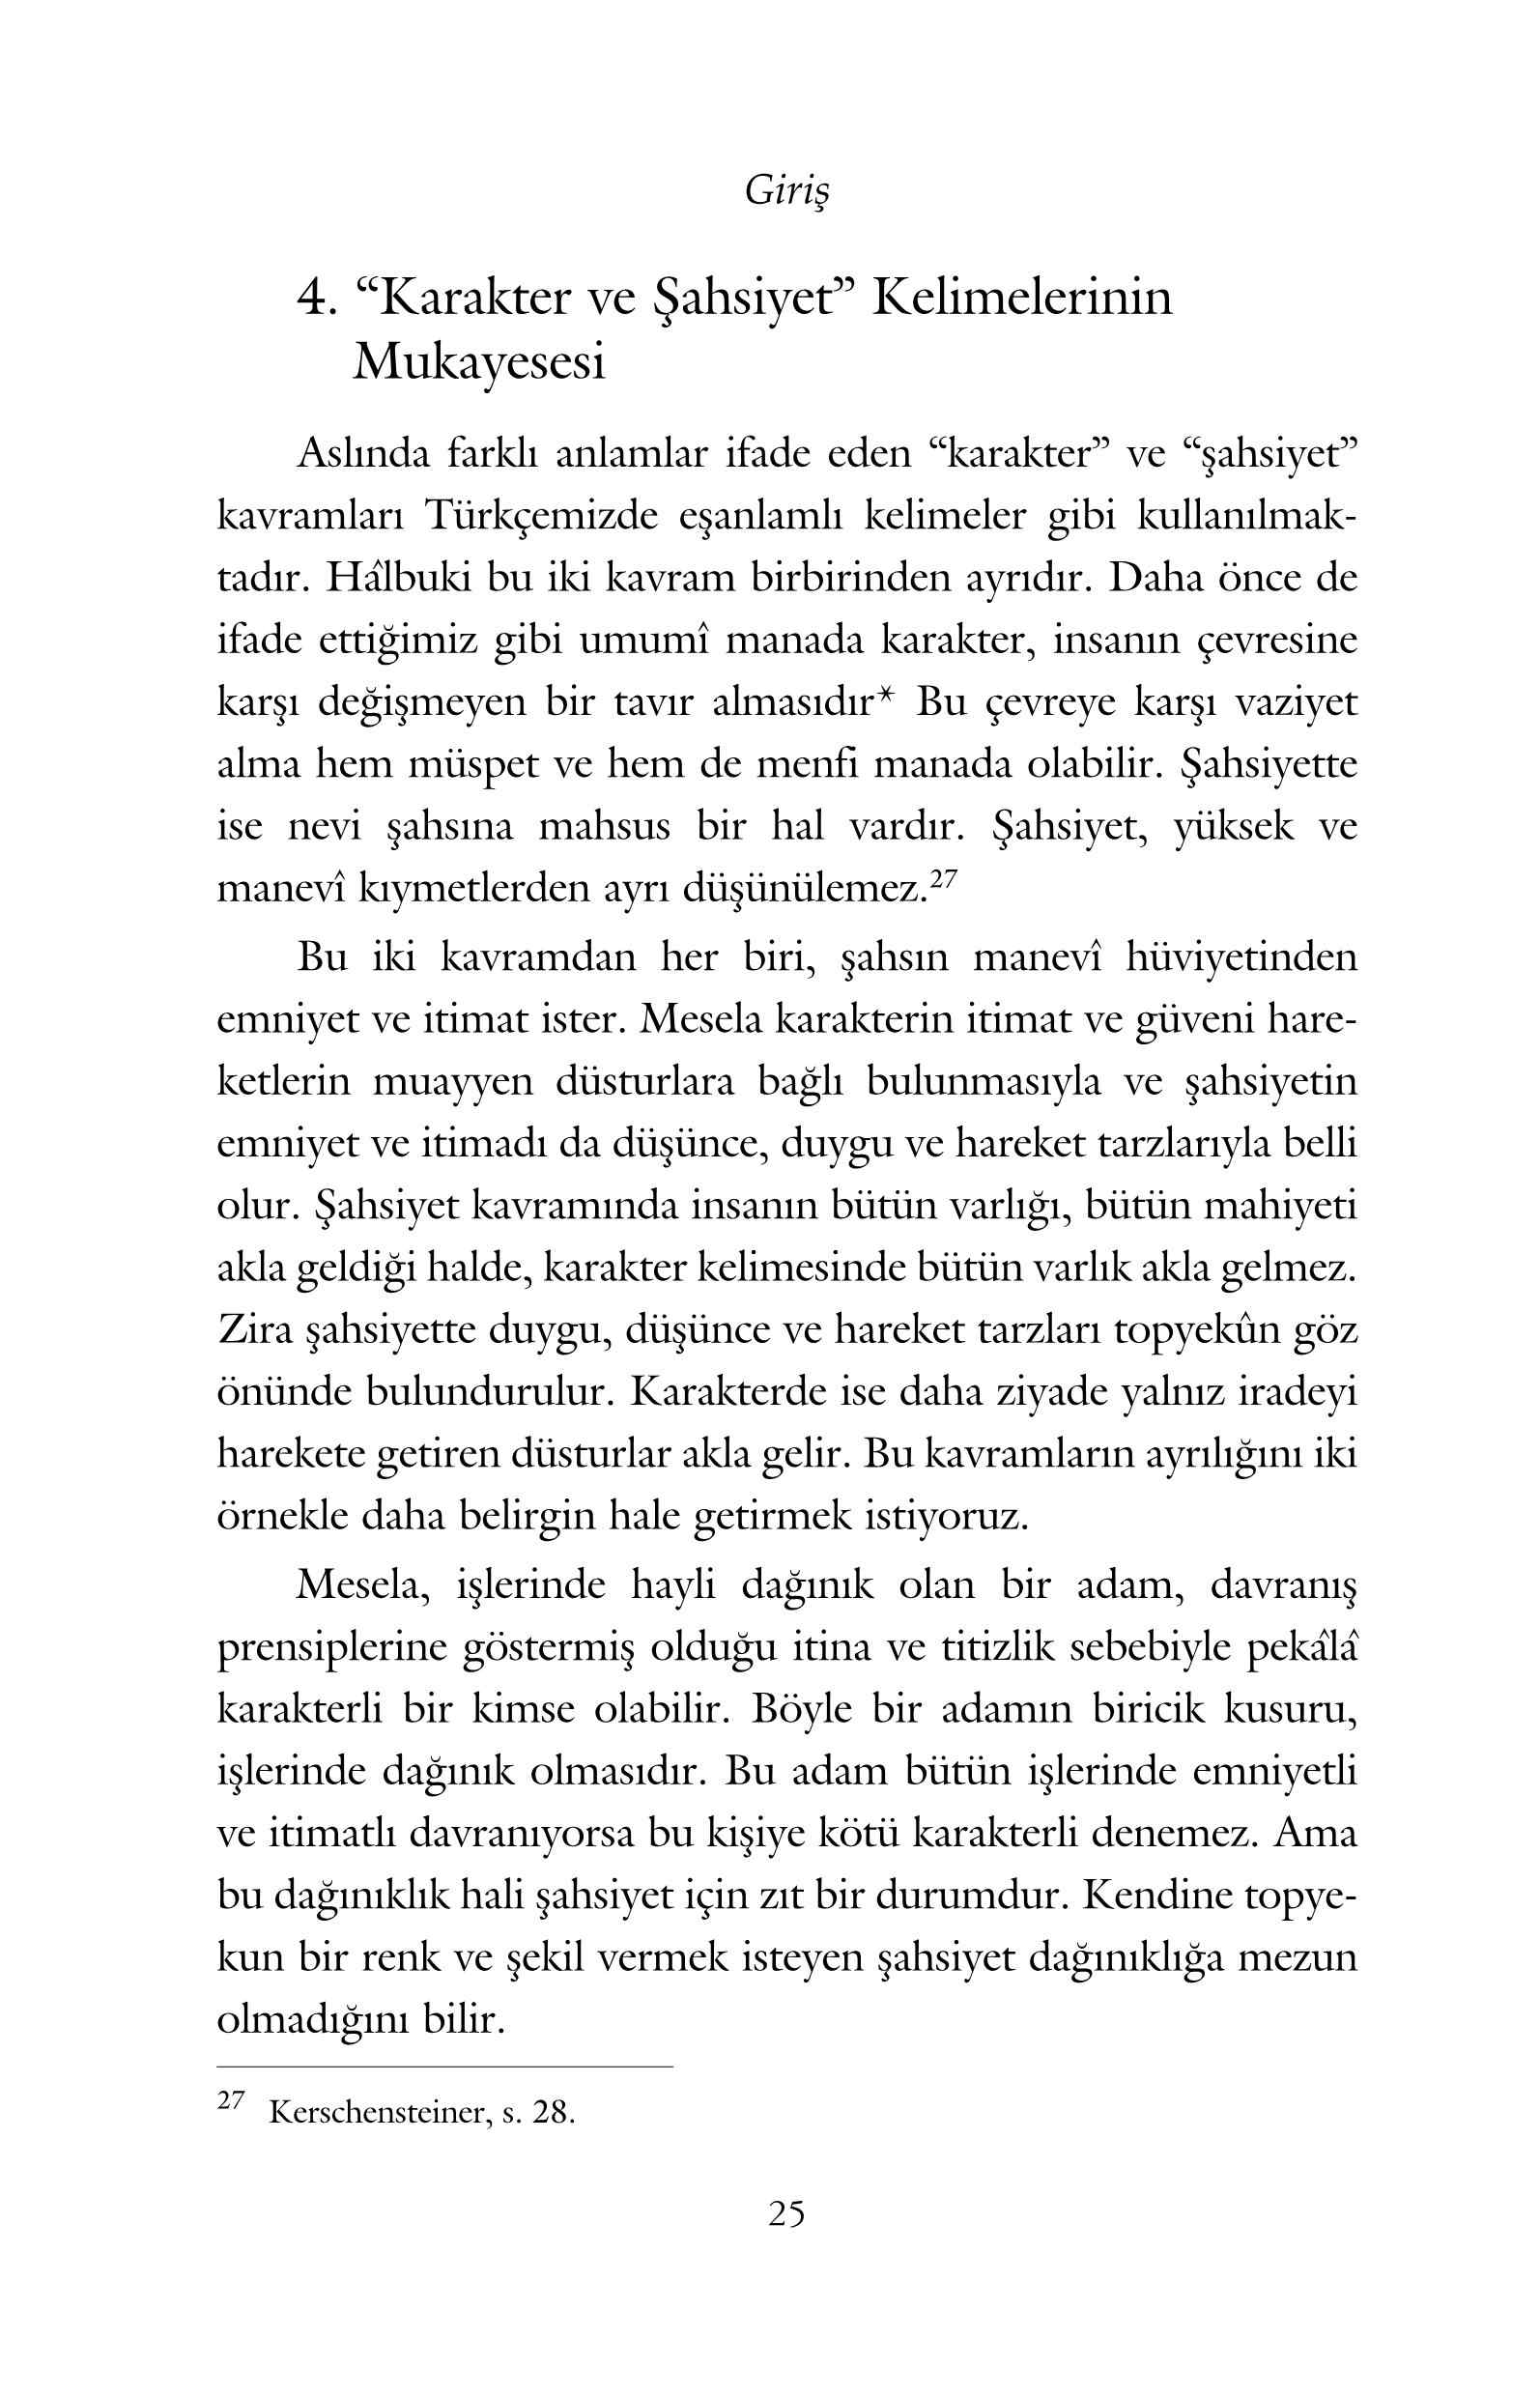 Musa Kazim Gulcur - Kuranda Karakter Egitimi - IsikAkademiY.pdf, 111-Sayfa 